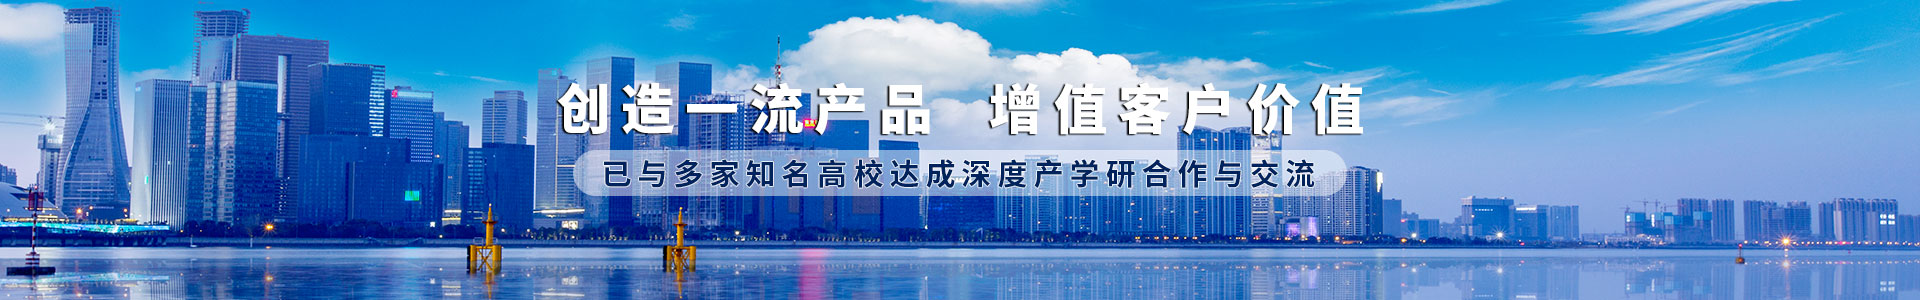 BB电子·(china)官方网站_image8924